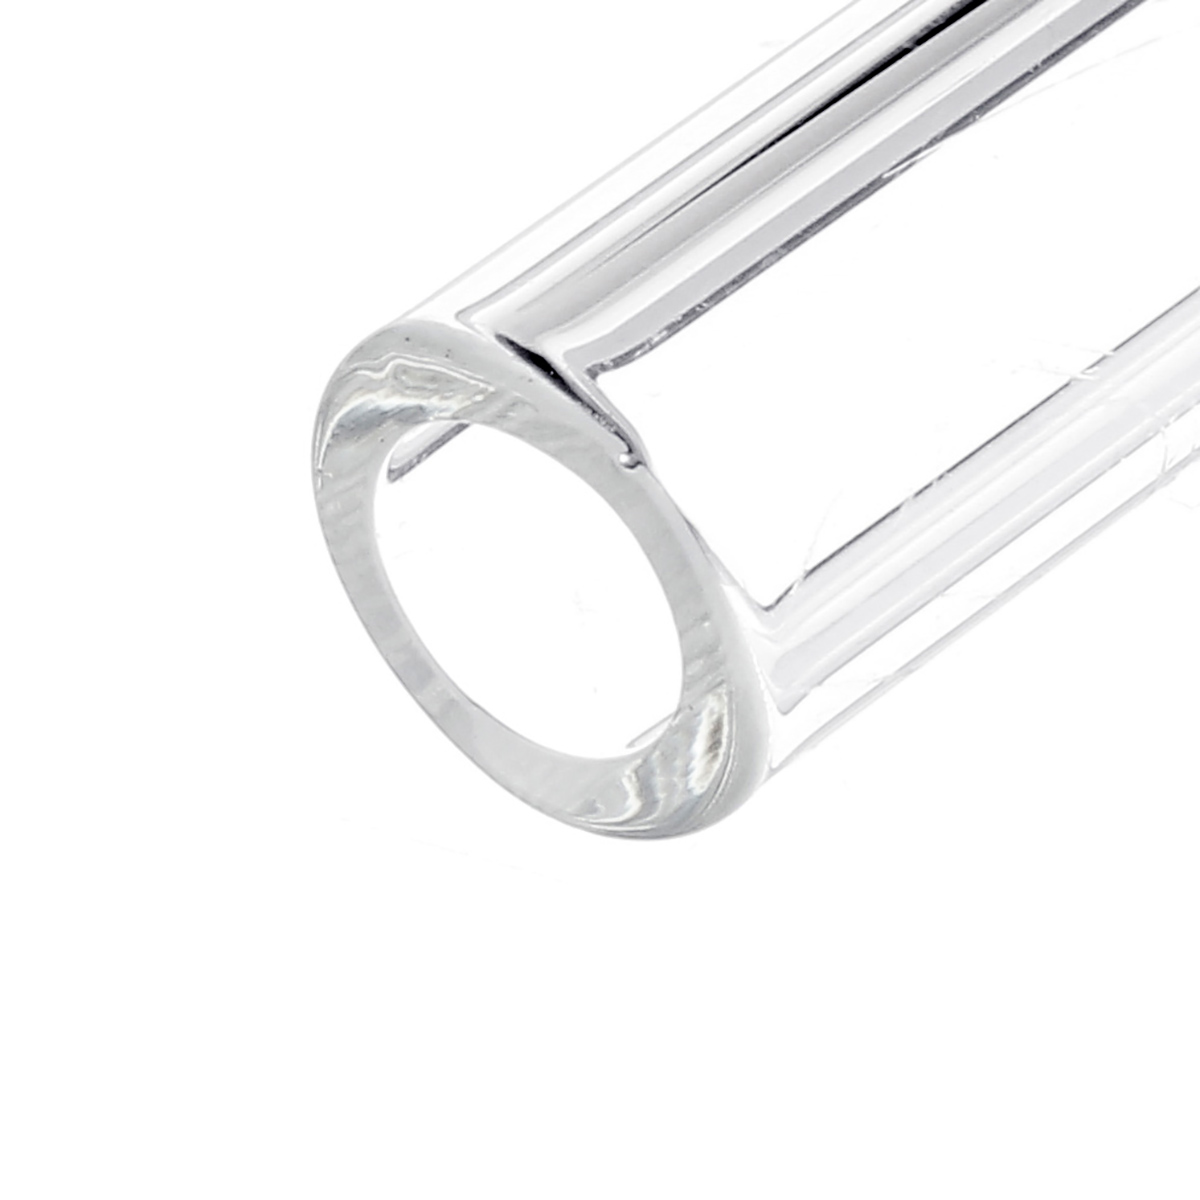 10Pcs 300mm Length OD 7mm 2mm Thick Wall Lab Borosilicate Glass Blowing Tube